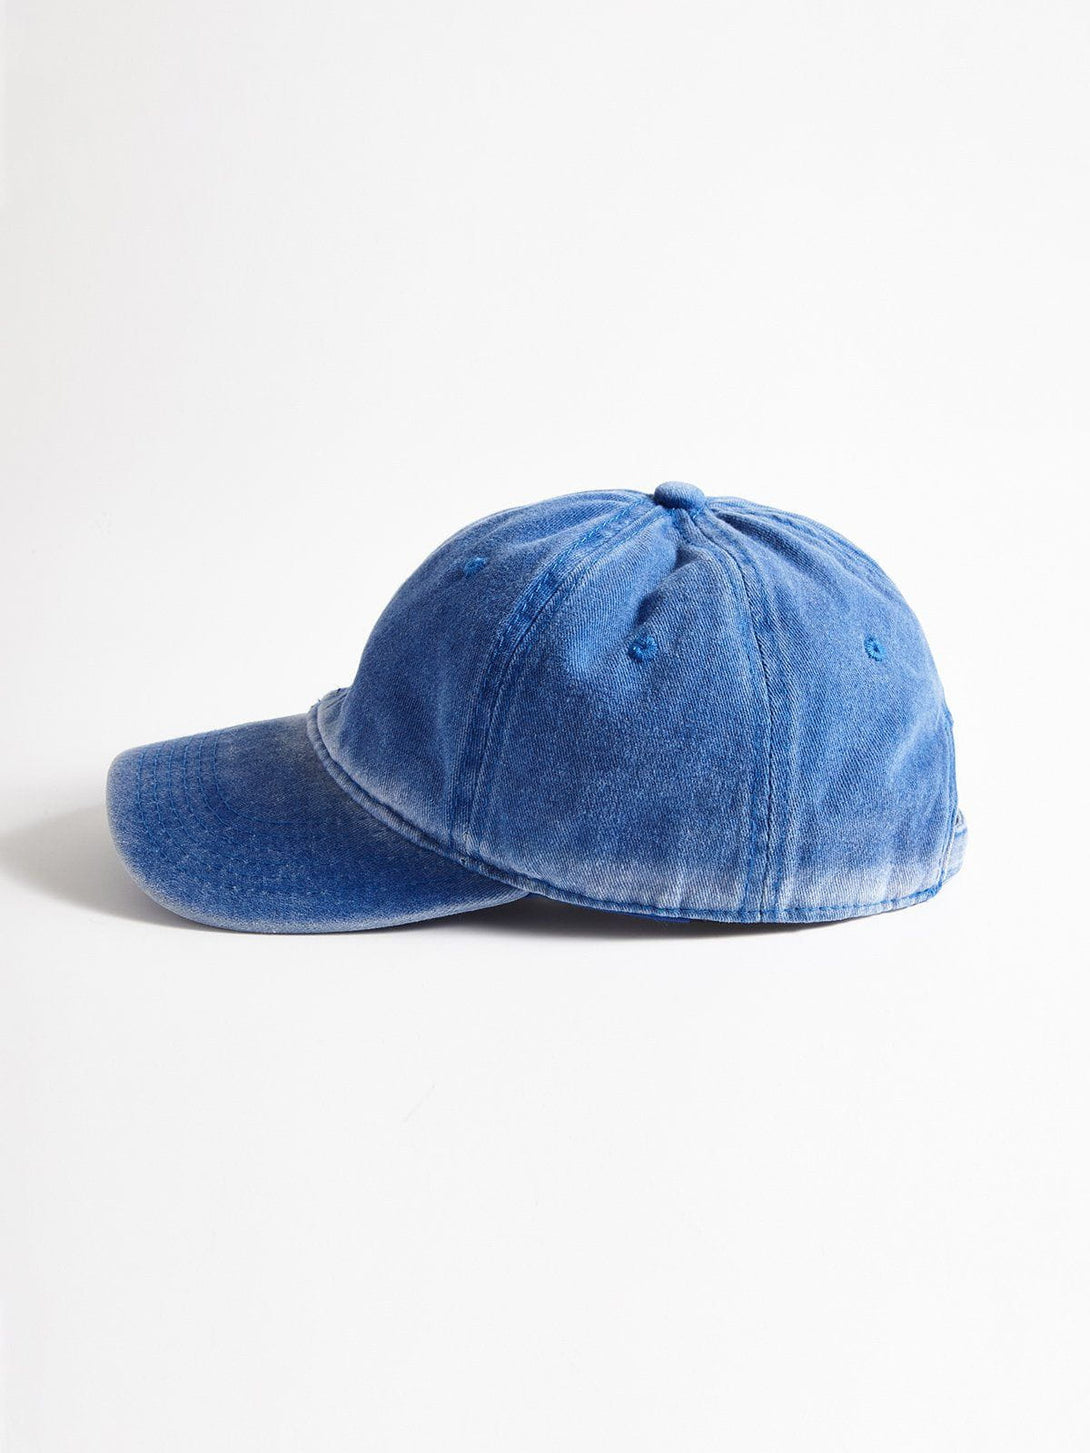 Levefly - Vintage Gradient Washed Hat - Streetwear Fashion - levefly.com